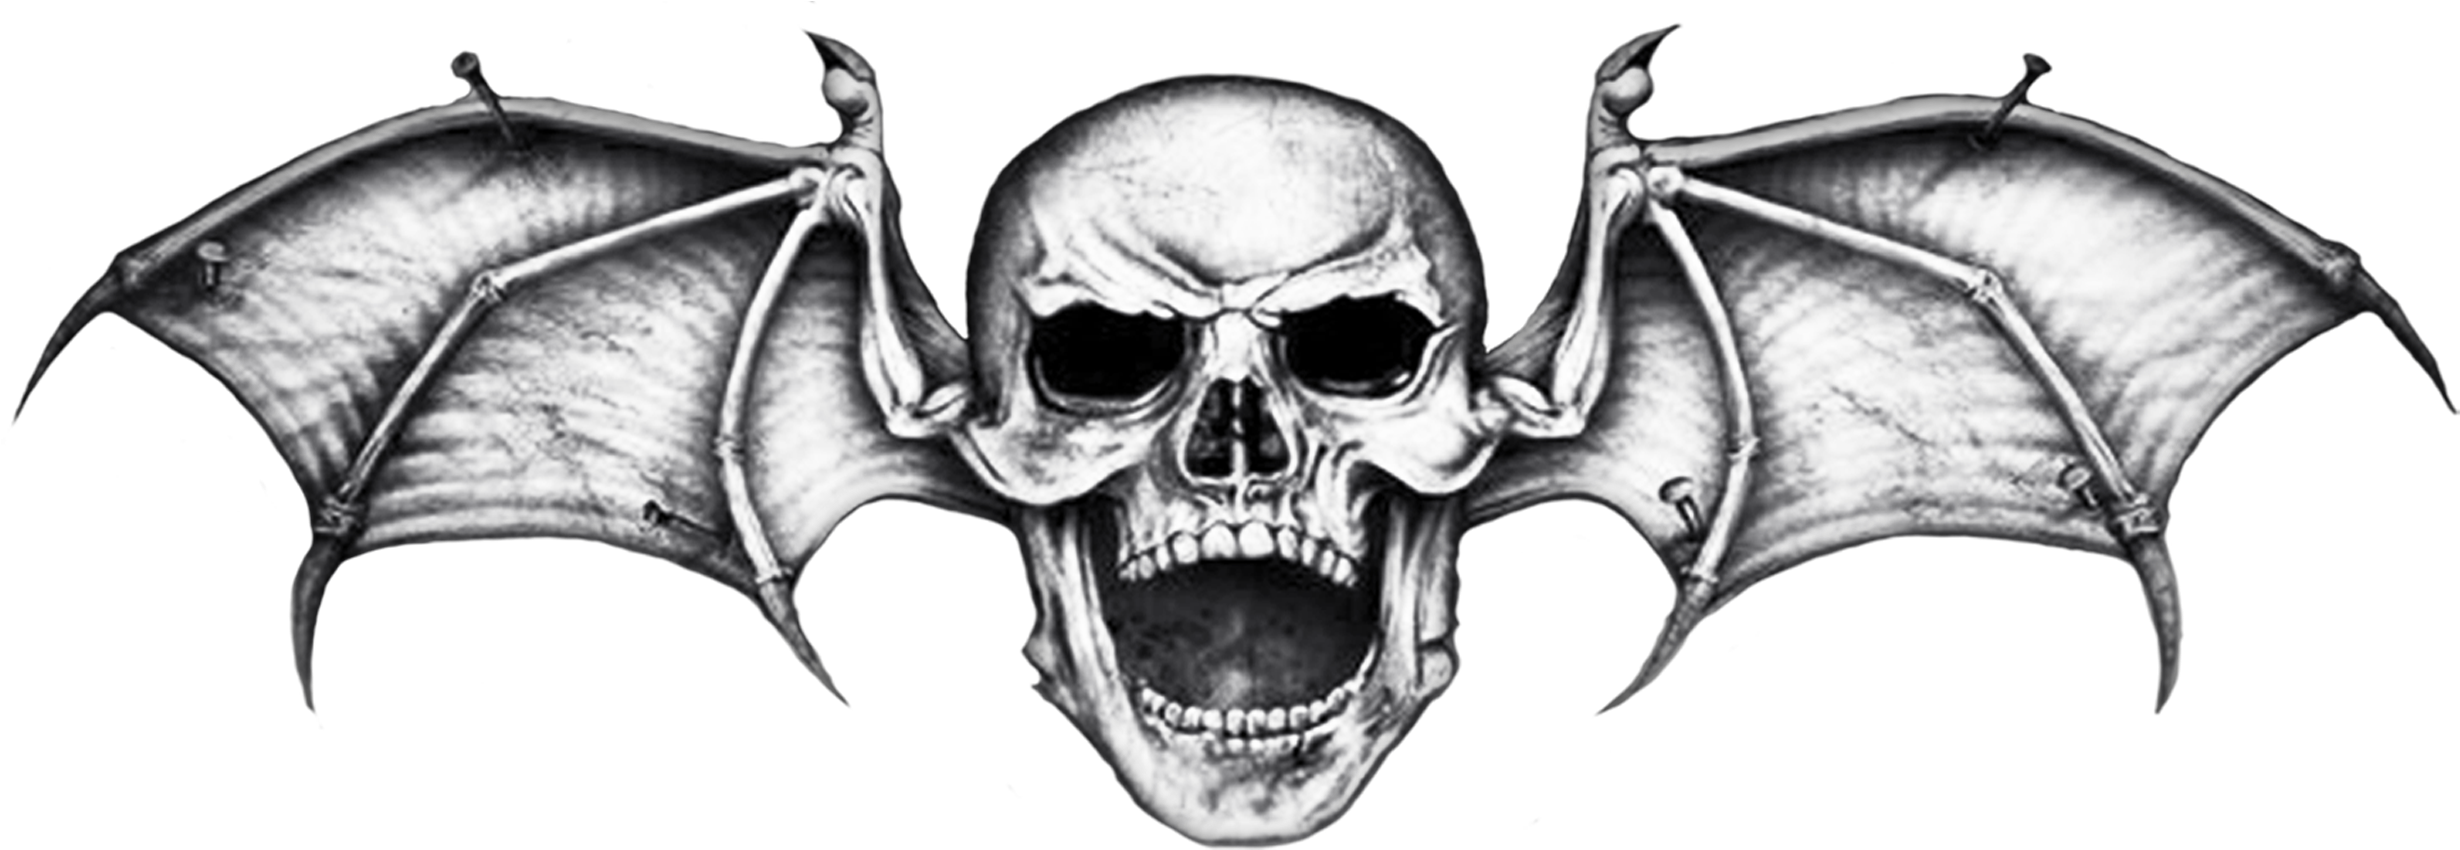 Amazing Avenged Sevenfold Deathbat Tattoo Avenged Sevenfold Deathbat - Clip Art Library